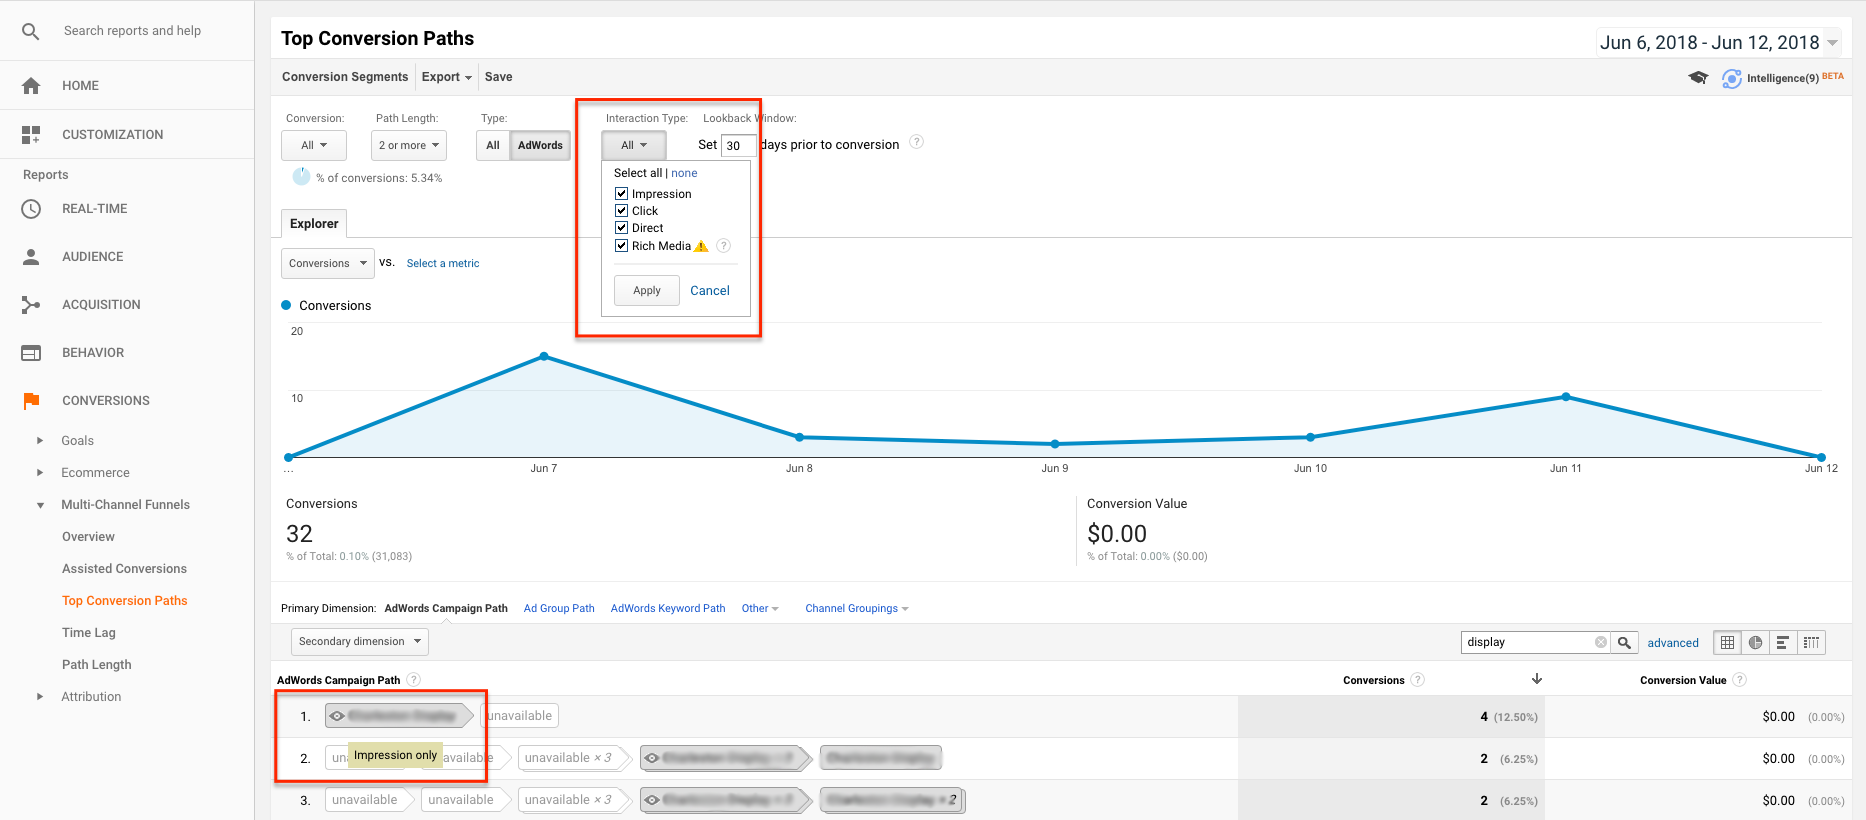 Google Analytics Display Network Impression Reporting